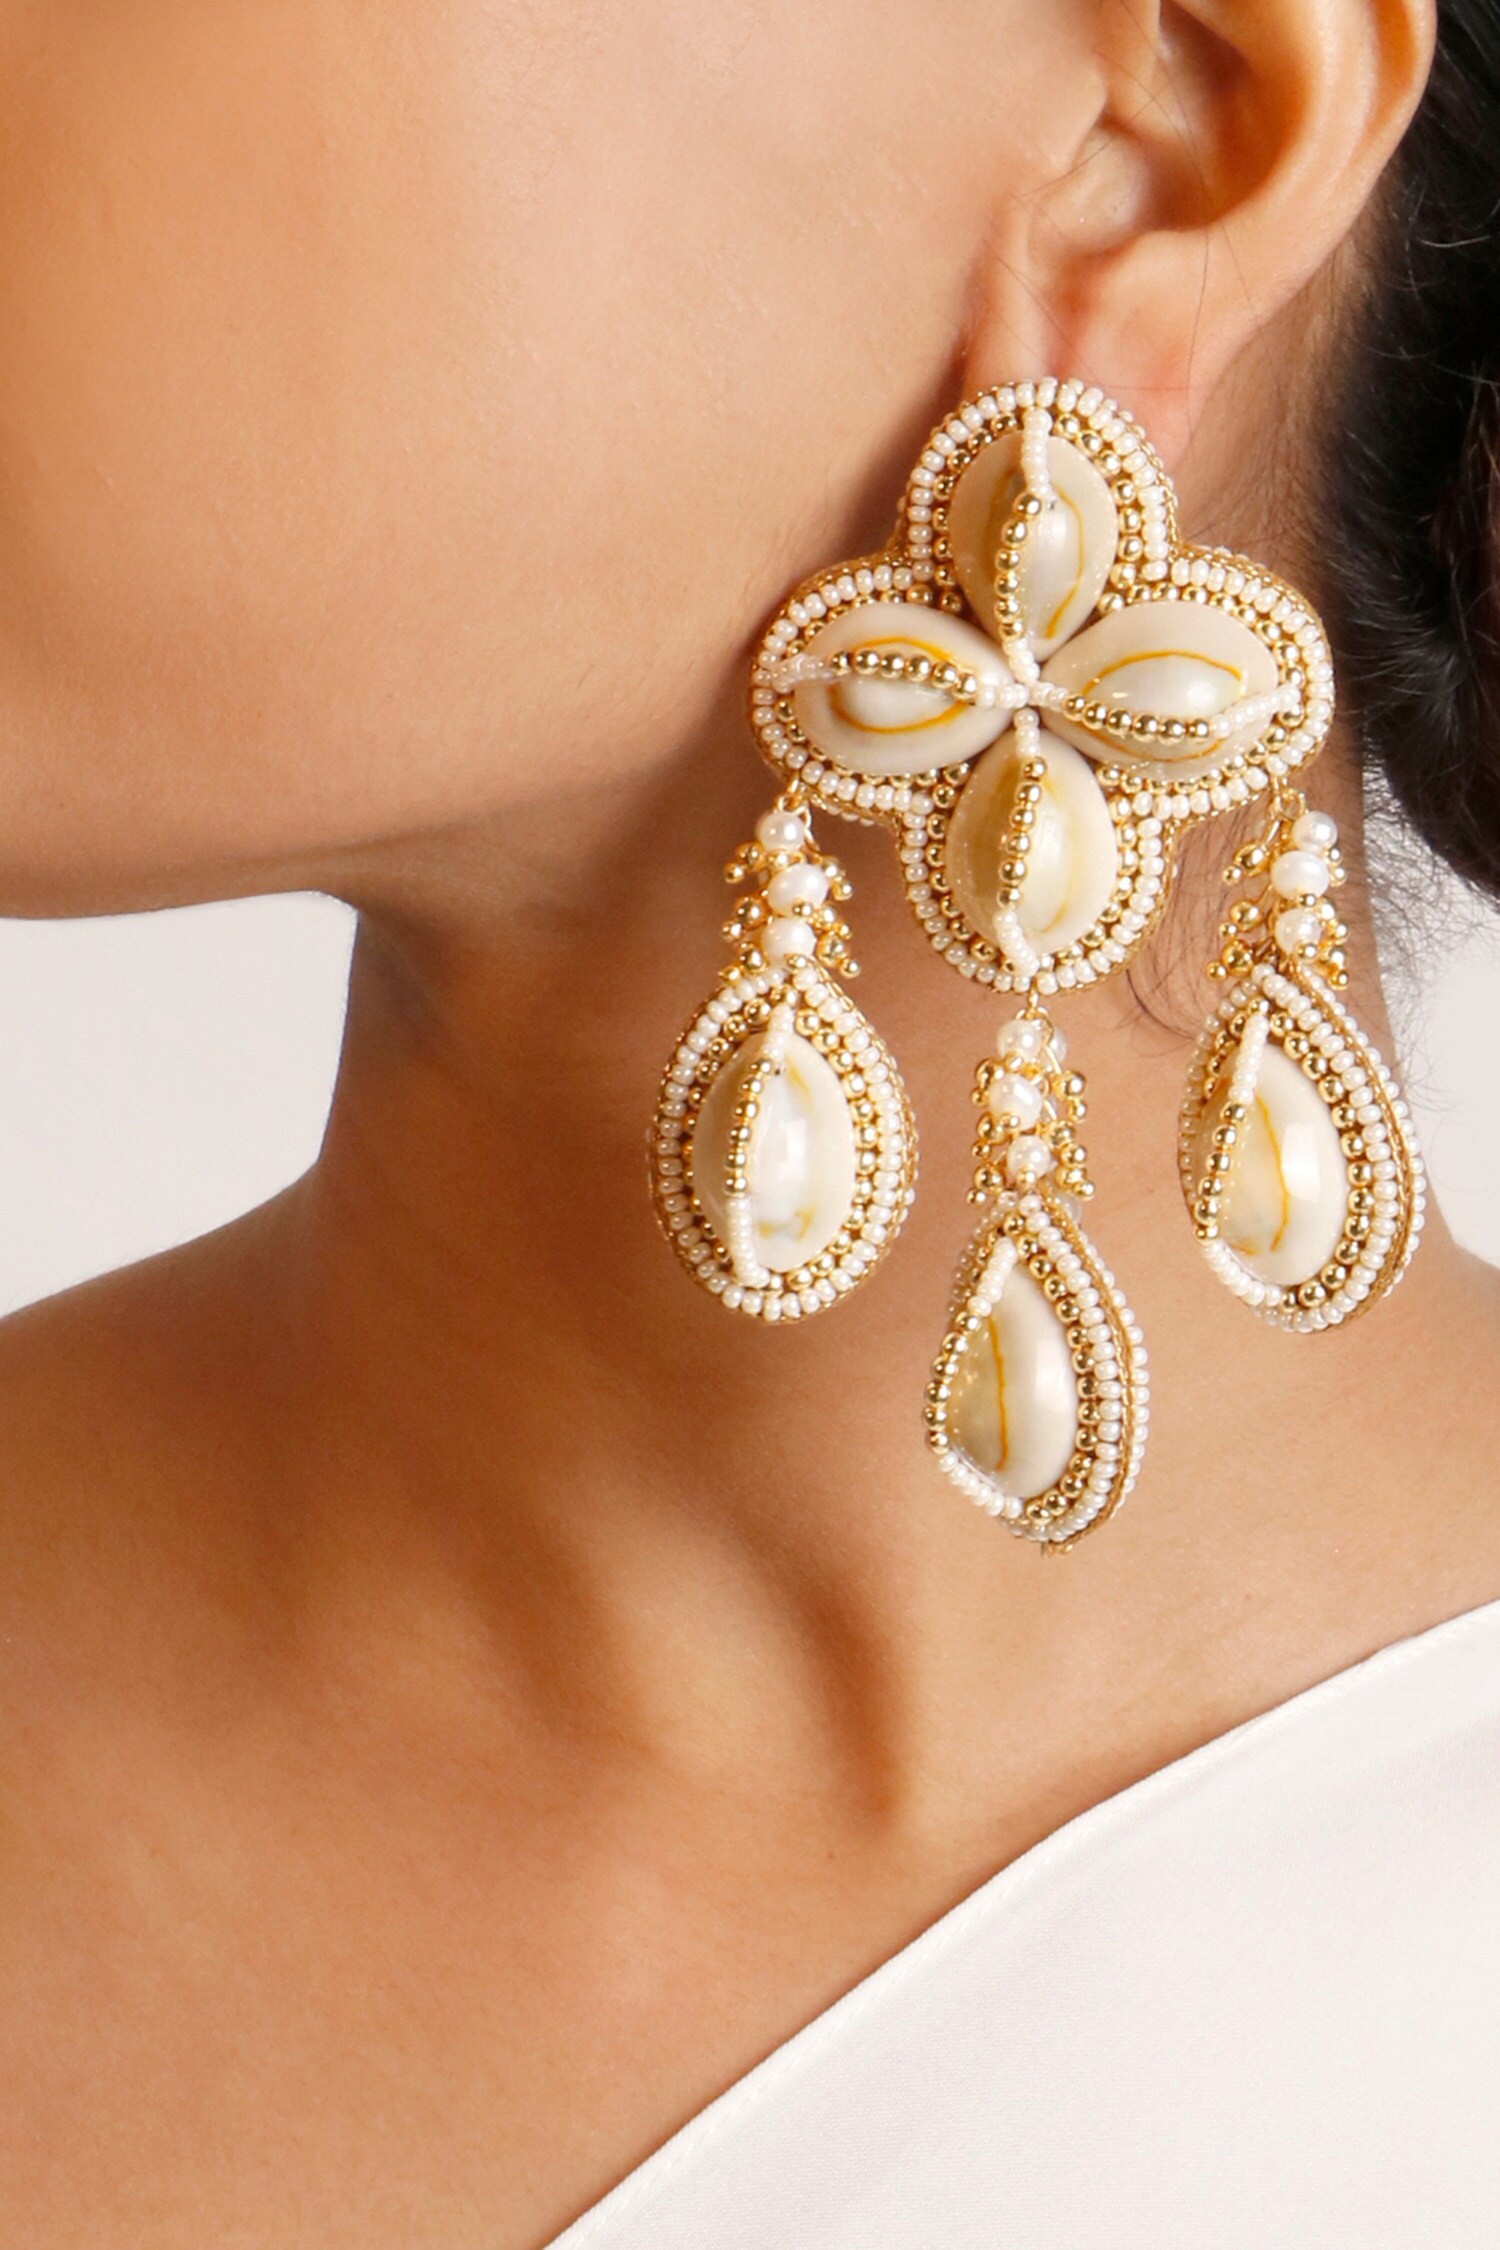 VIA LATTEA. Filigree earrings in Gold 18K with Mother of pearl